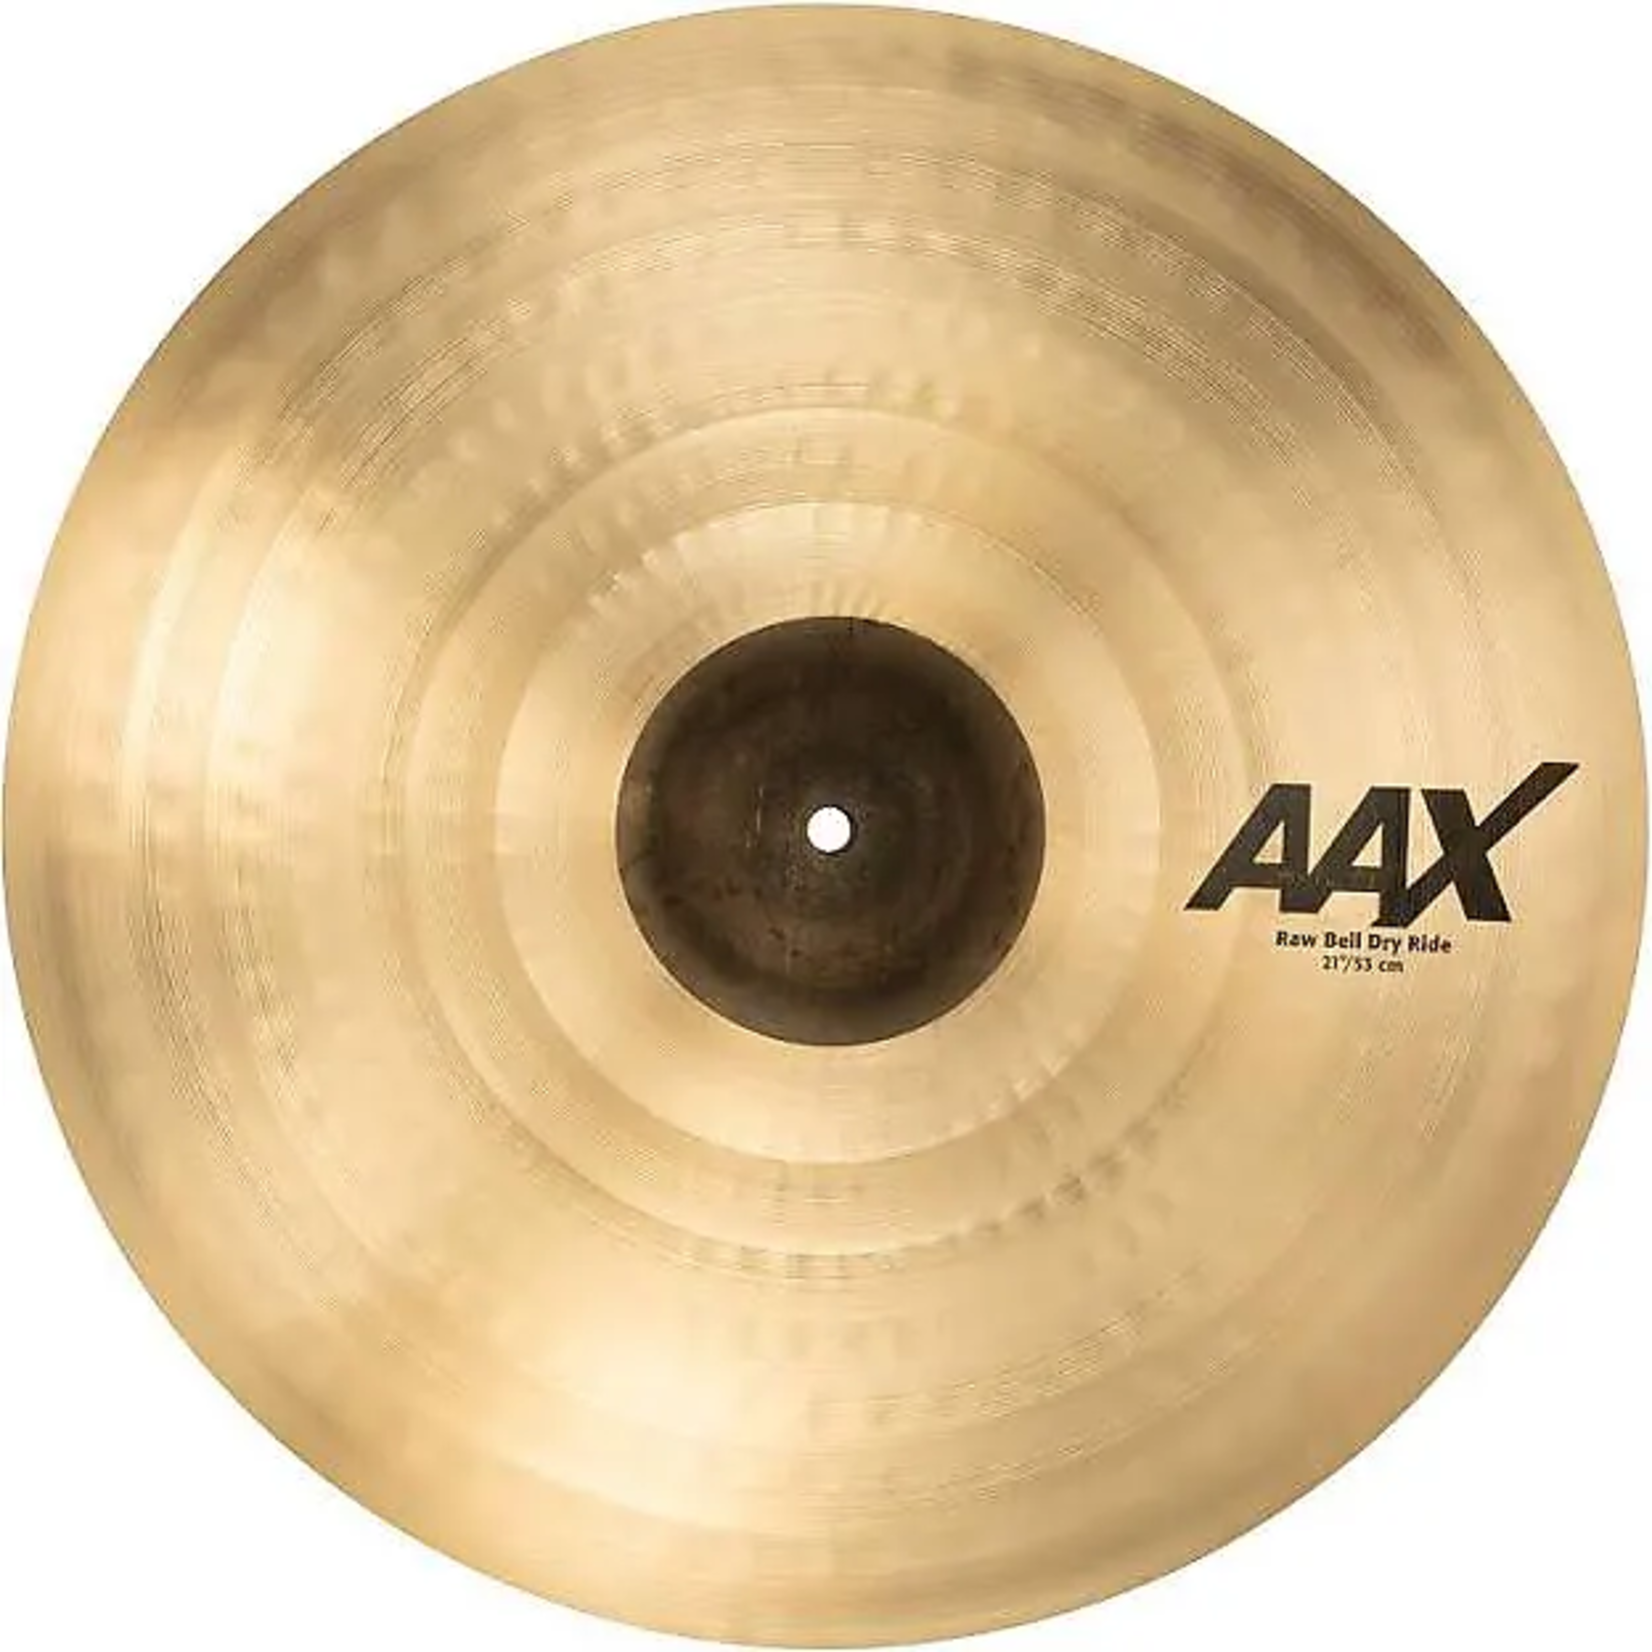 Sabian Sabian AAX 21" Raw Bell Dry Ride Cymbal